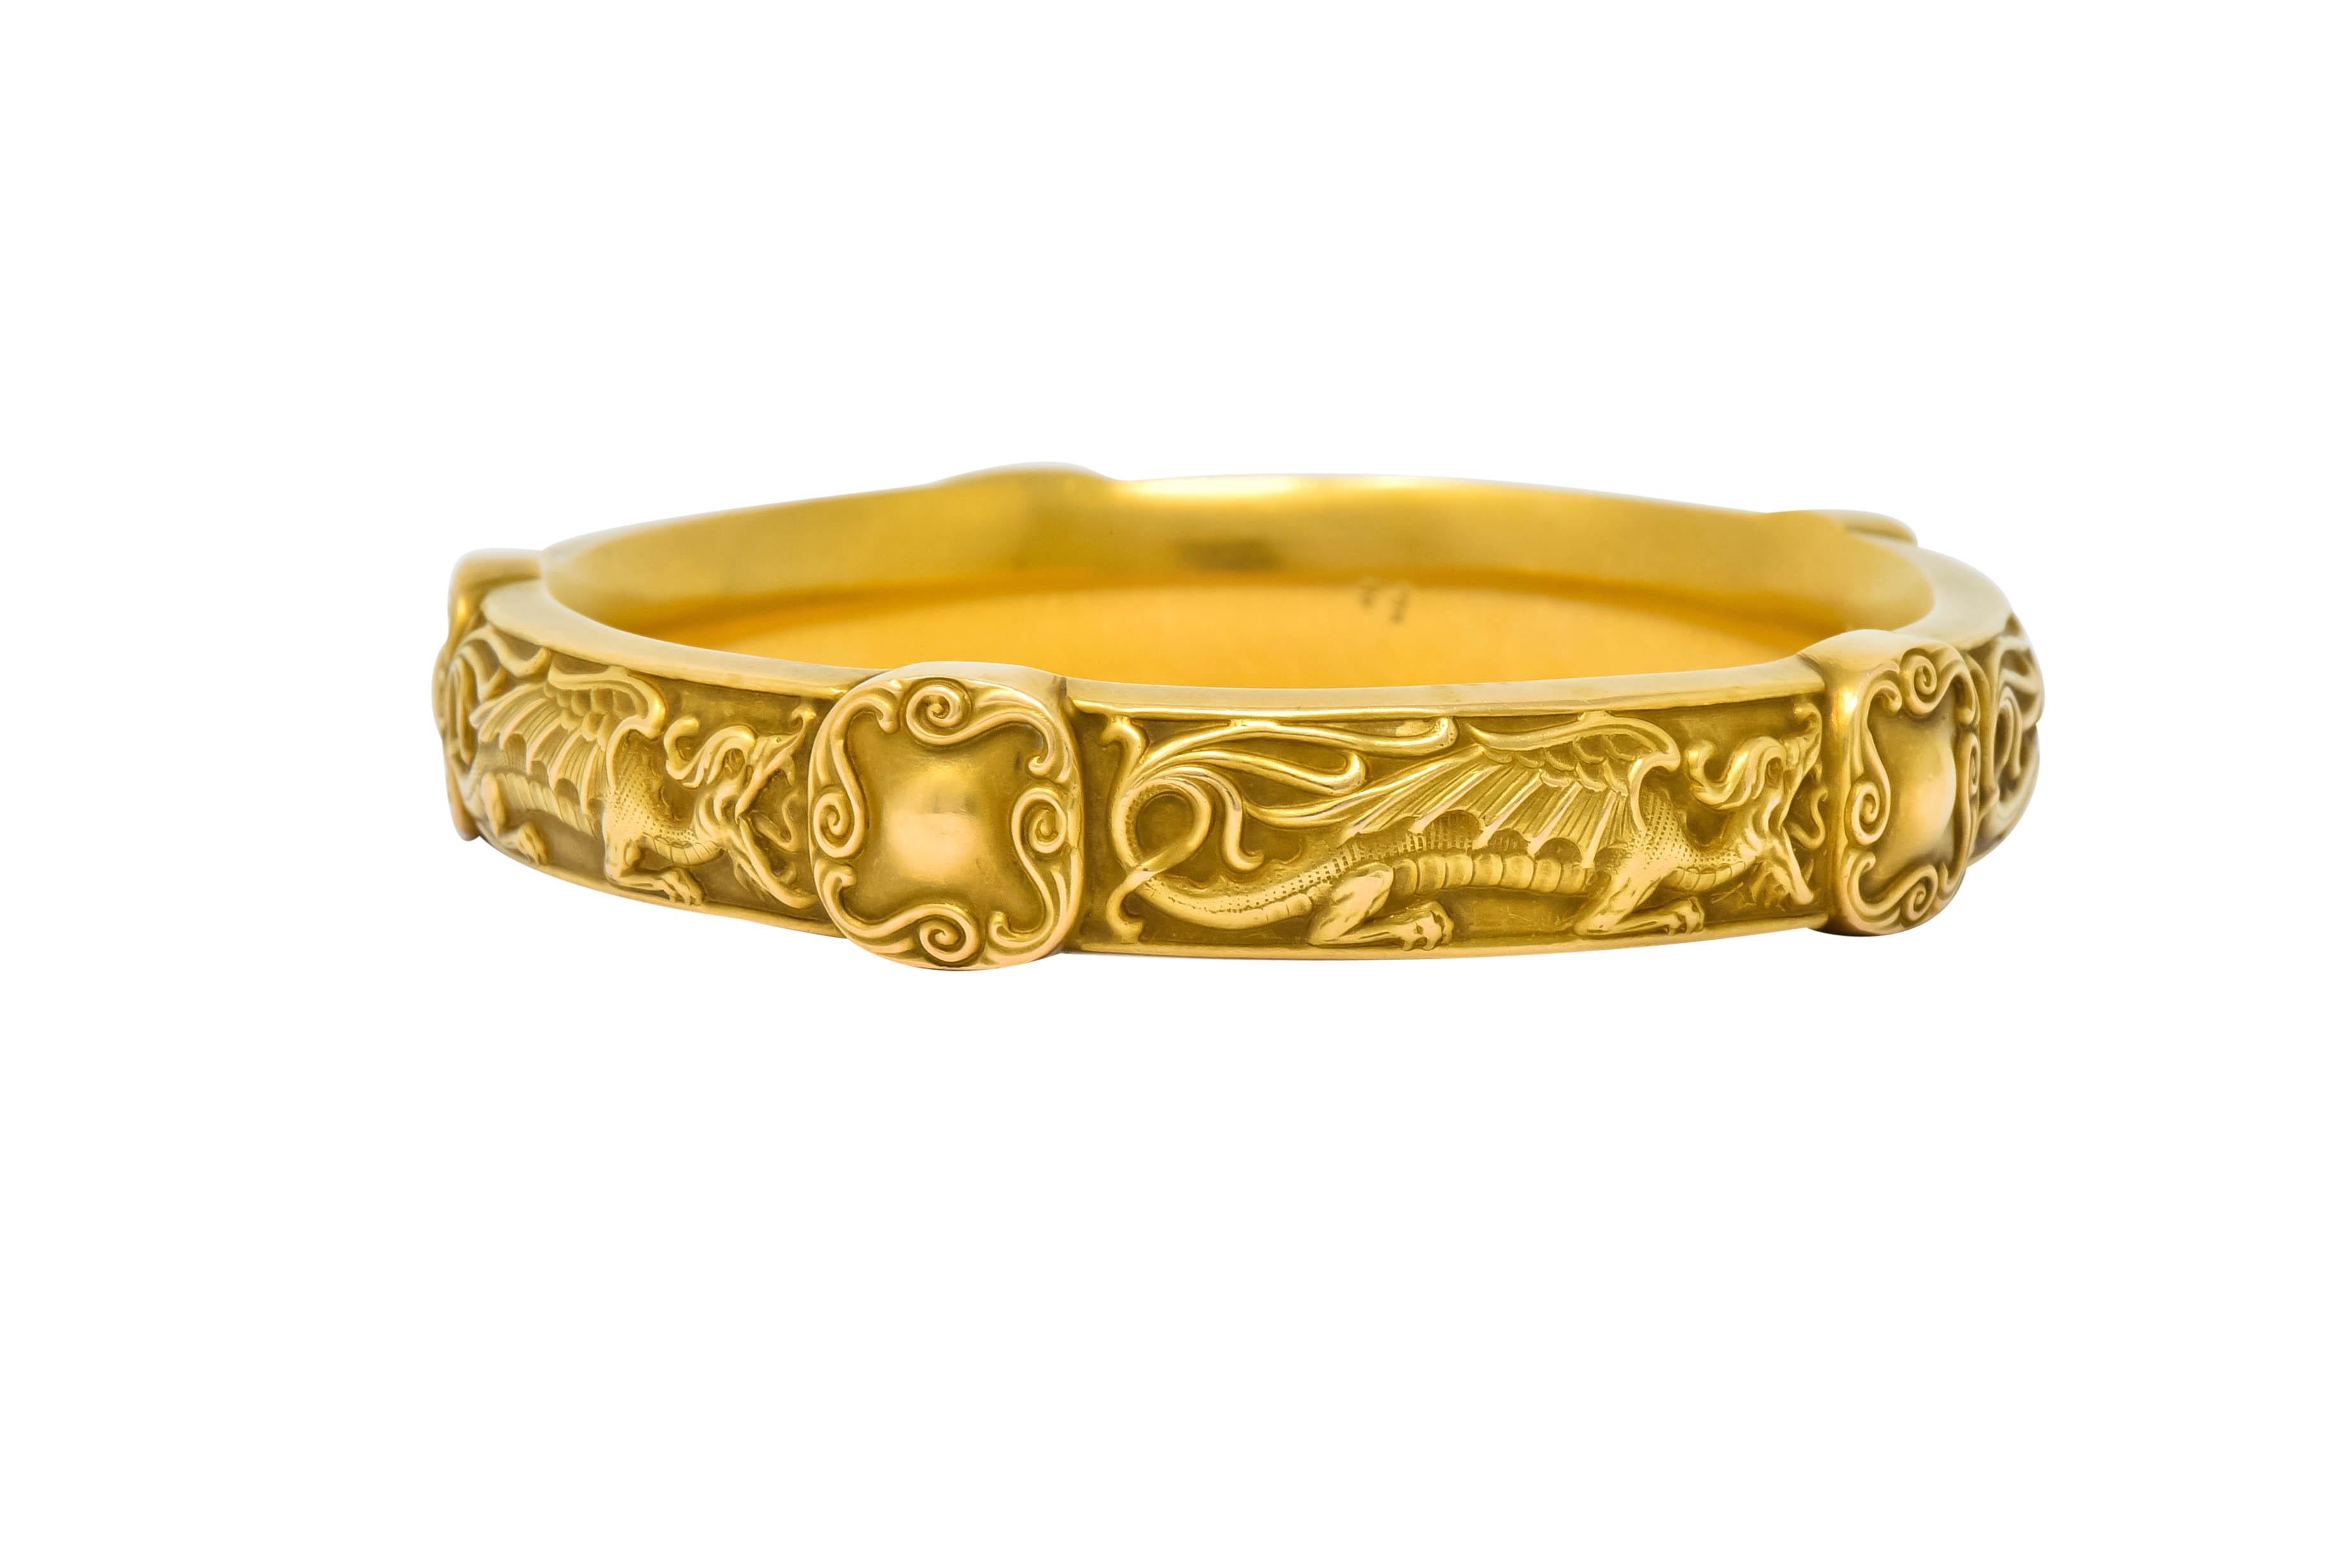 Riker Brothers Art Nouveau 14 Karat Gold Dragon Bangle Bracelet 1